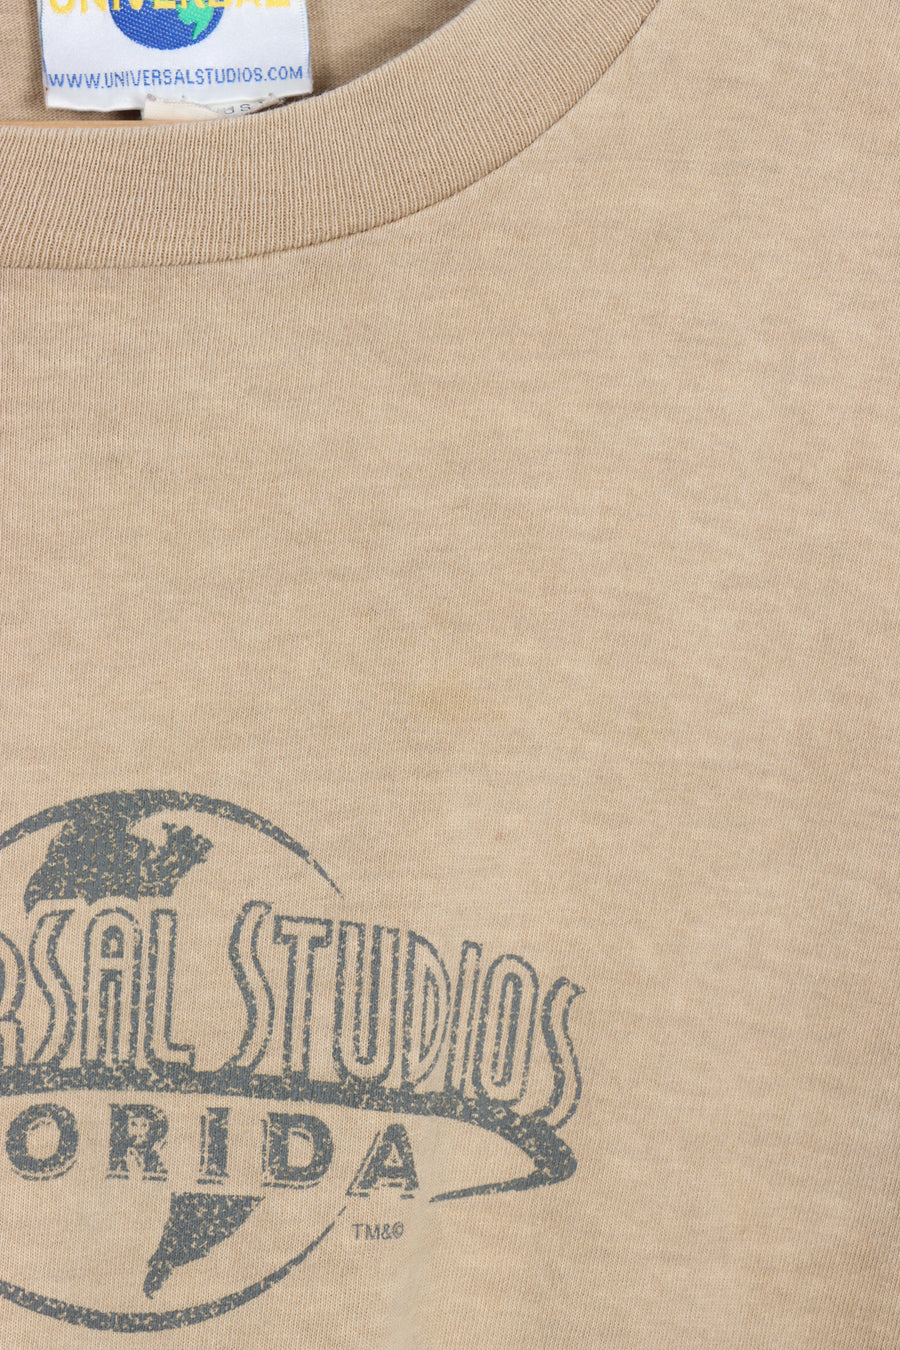 Universal Studios Florida USA Made Single Stitch Tan Tee USA Made (XL)